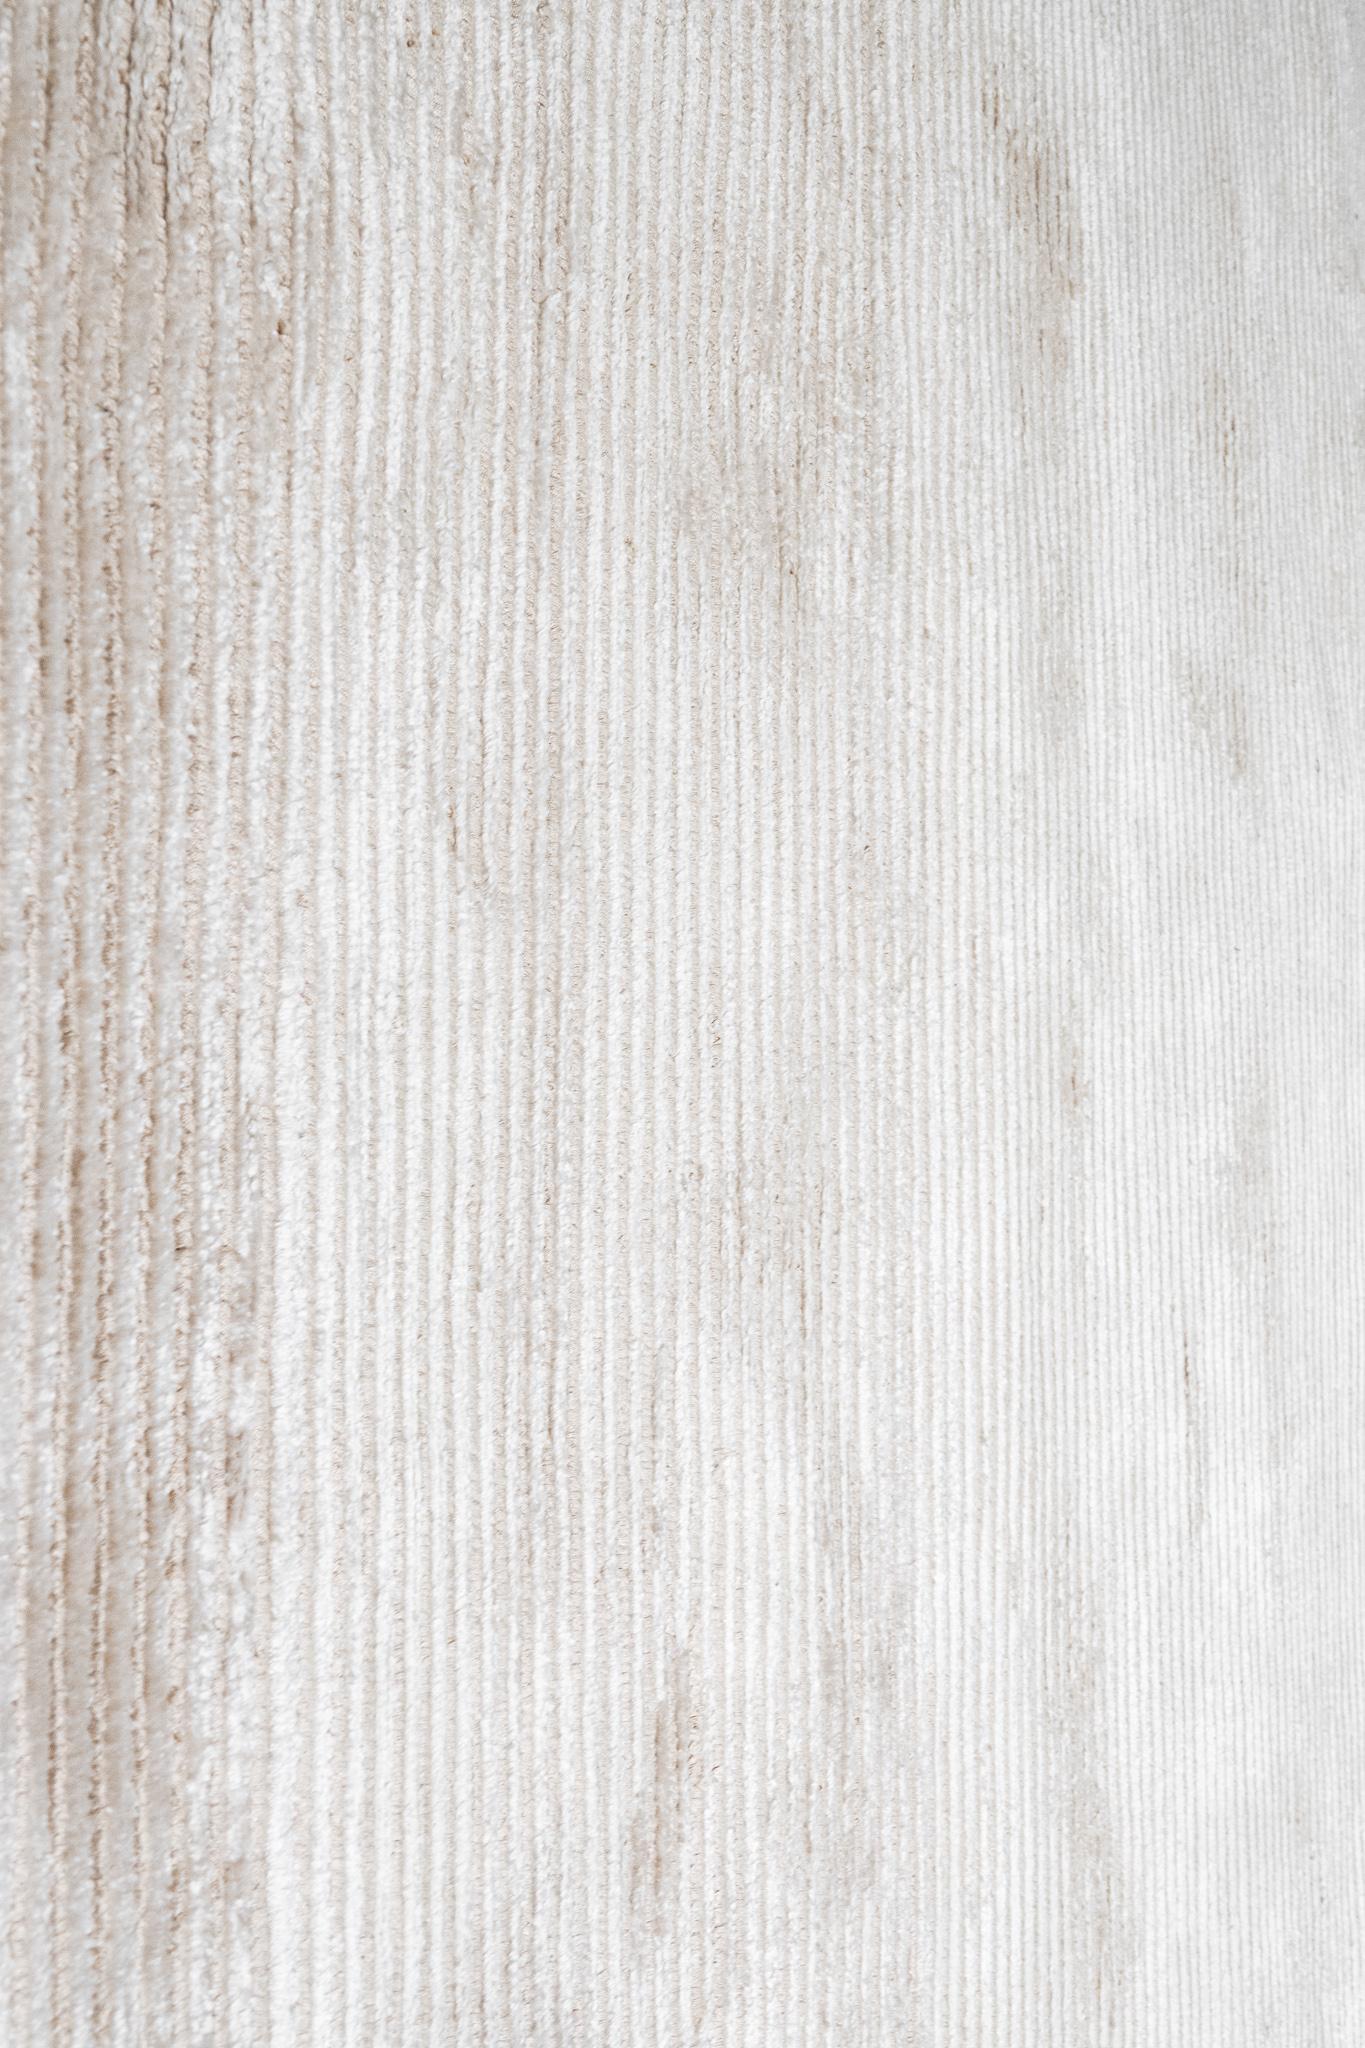 Hand-Knotted Plain White beige Contemporary rug Scandinavian Modern - Breton Beige For Sale